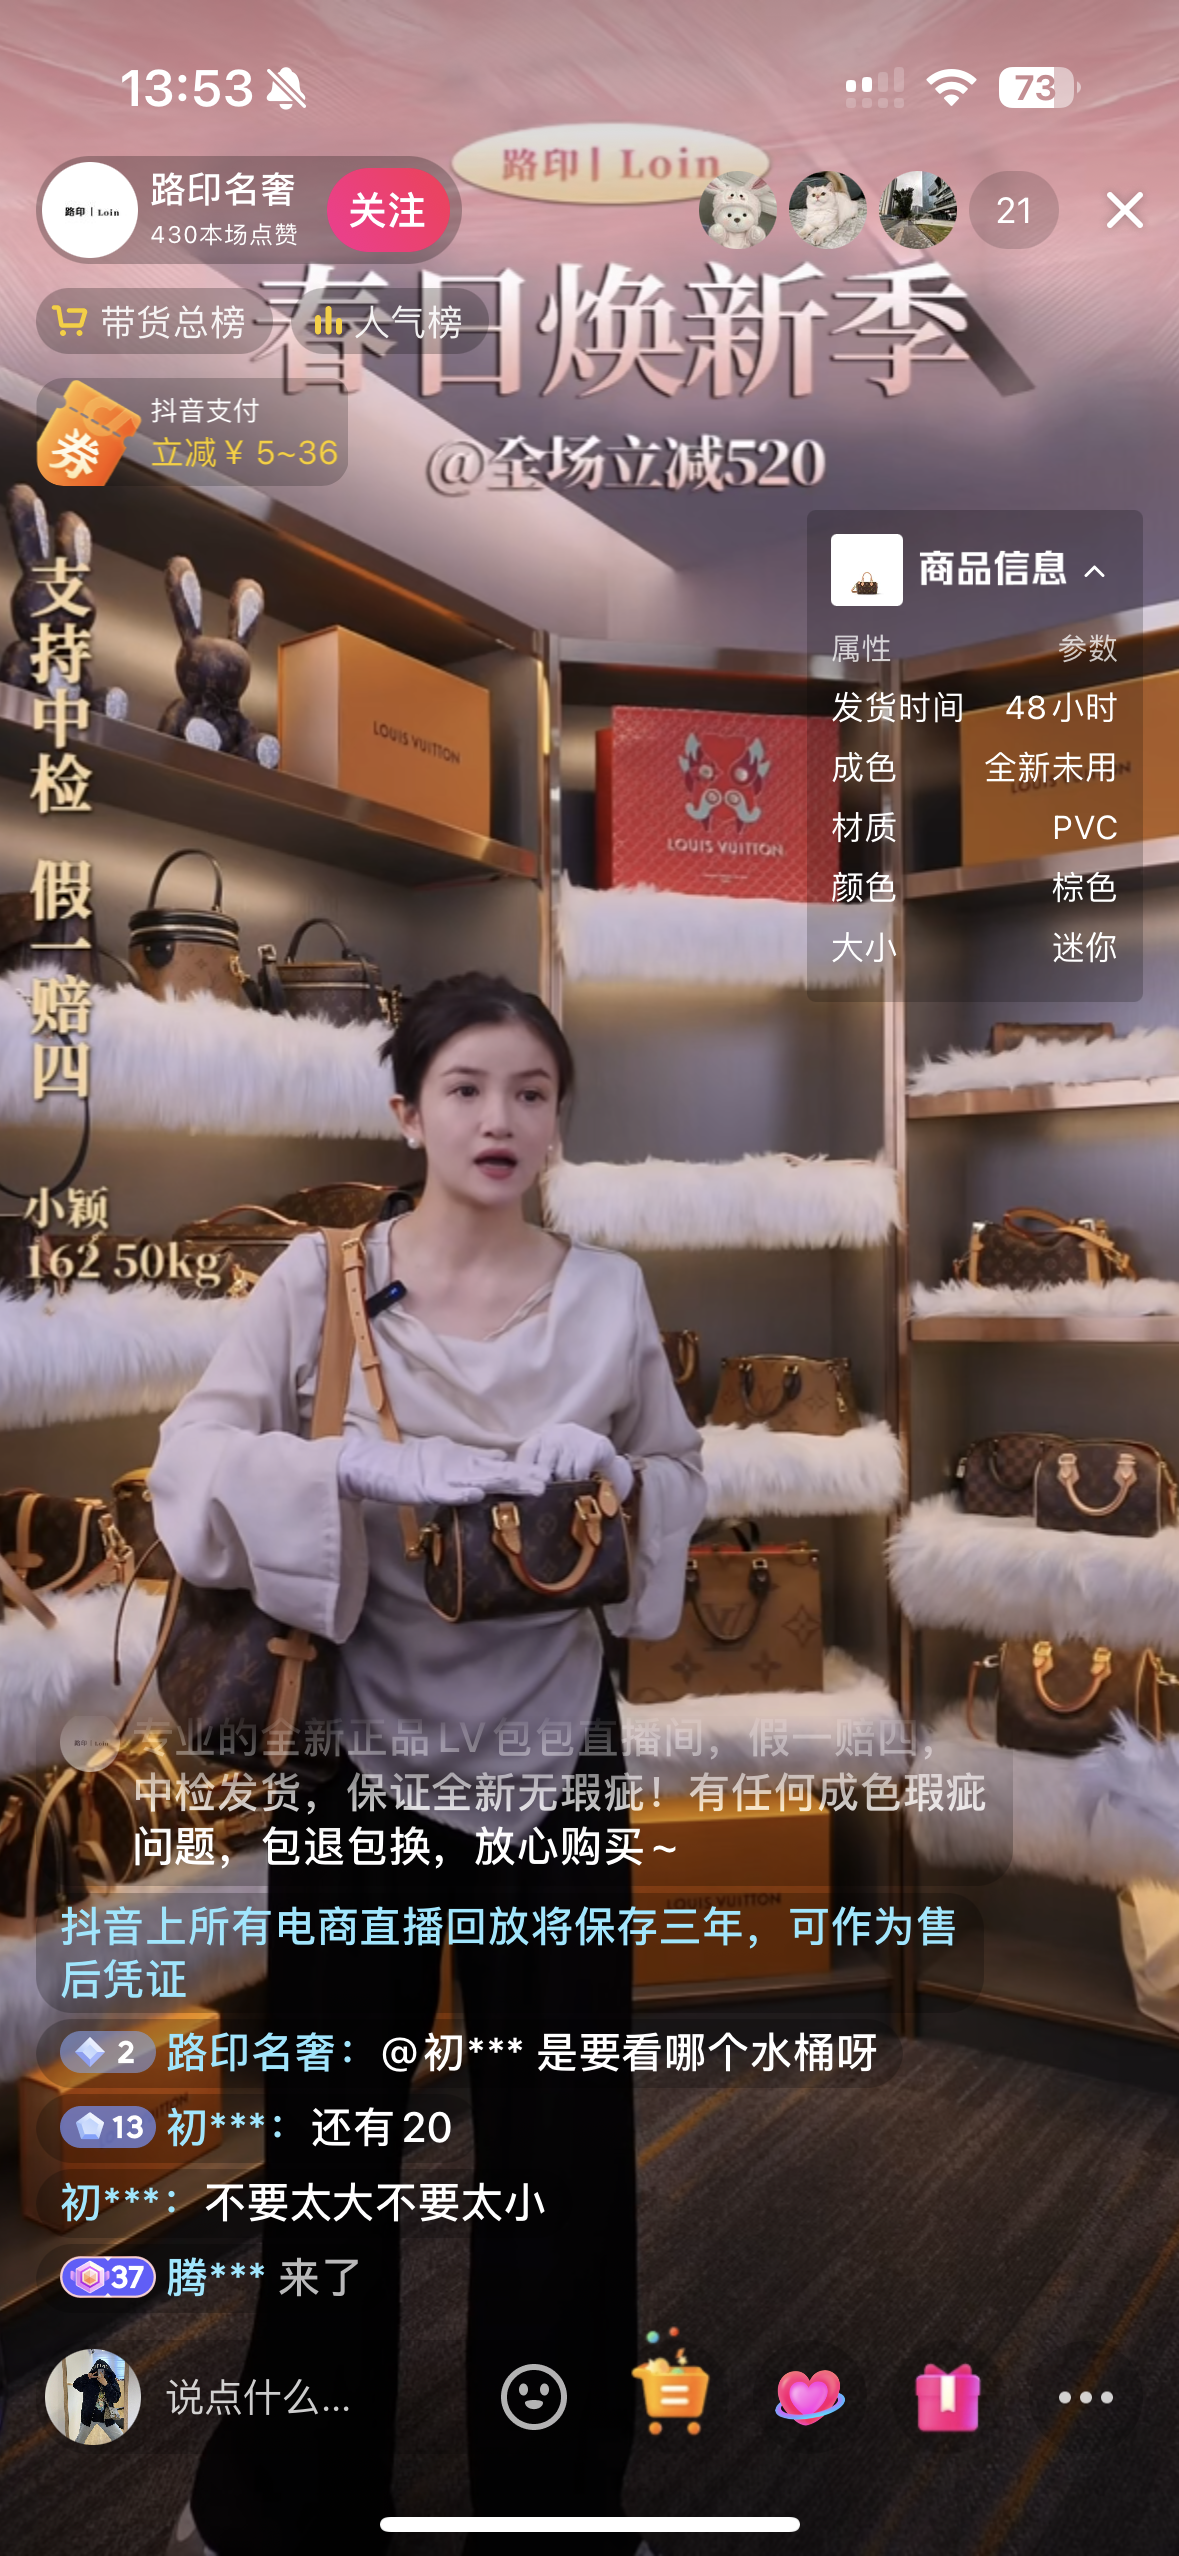 Selling second hand luxury handbags on Douyin livestreaming. Image: Douyin screenshot 